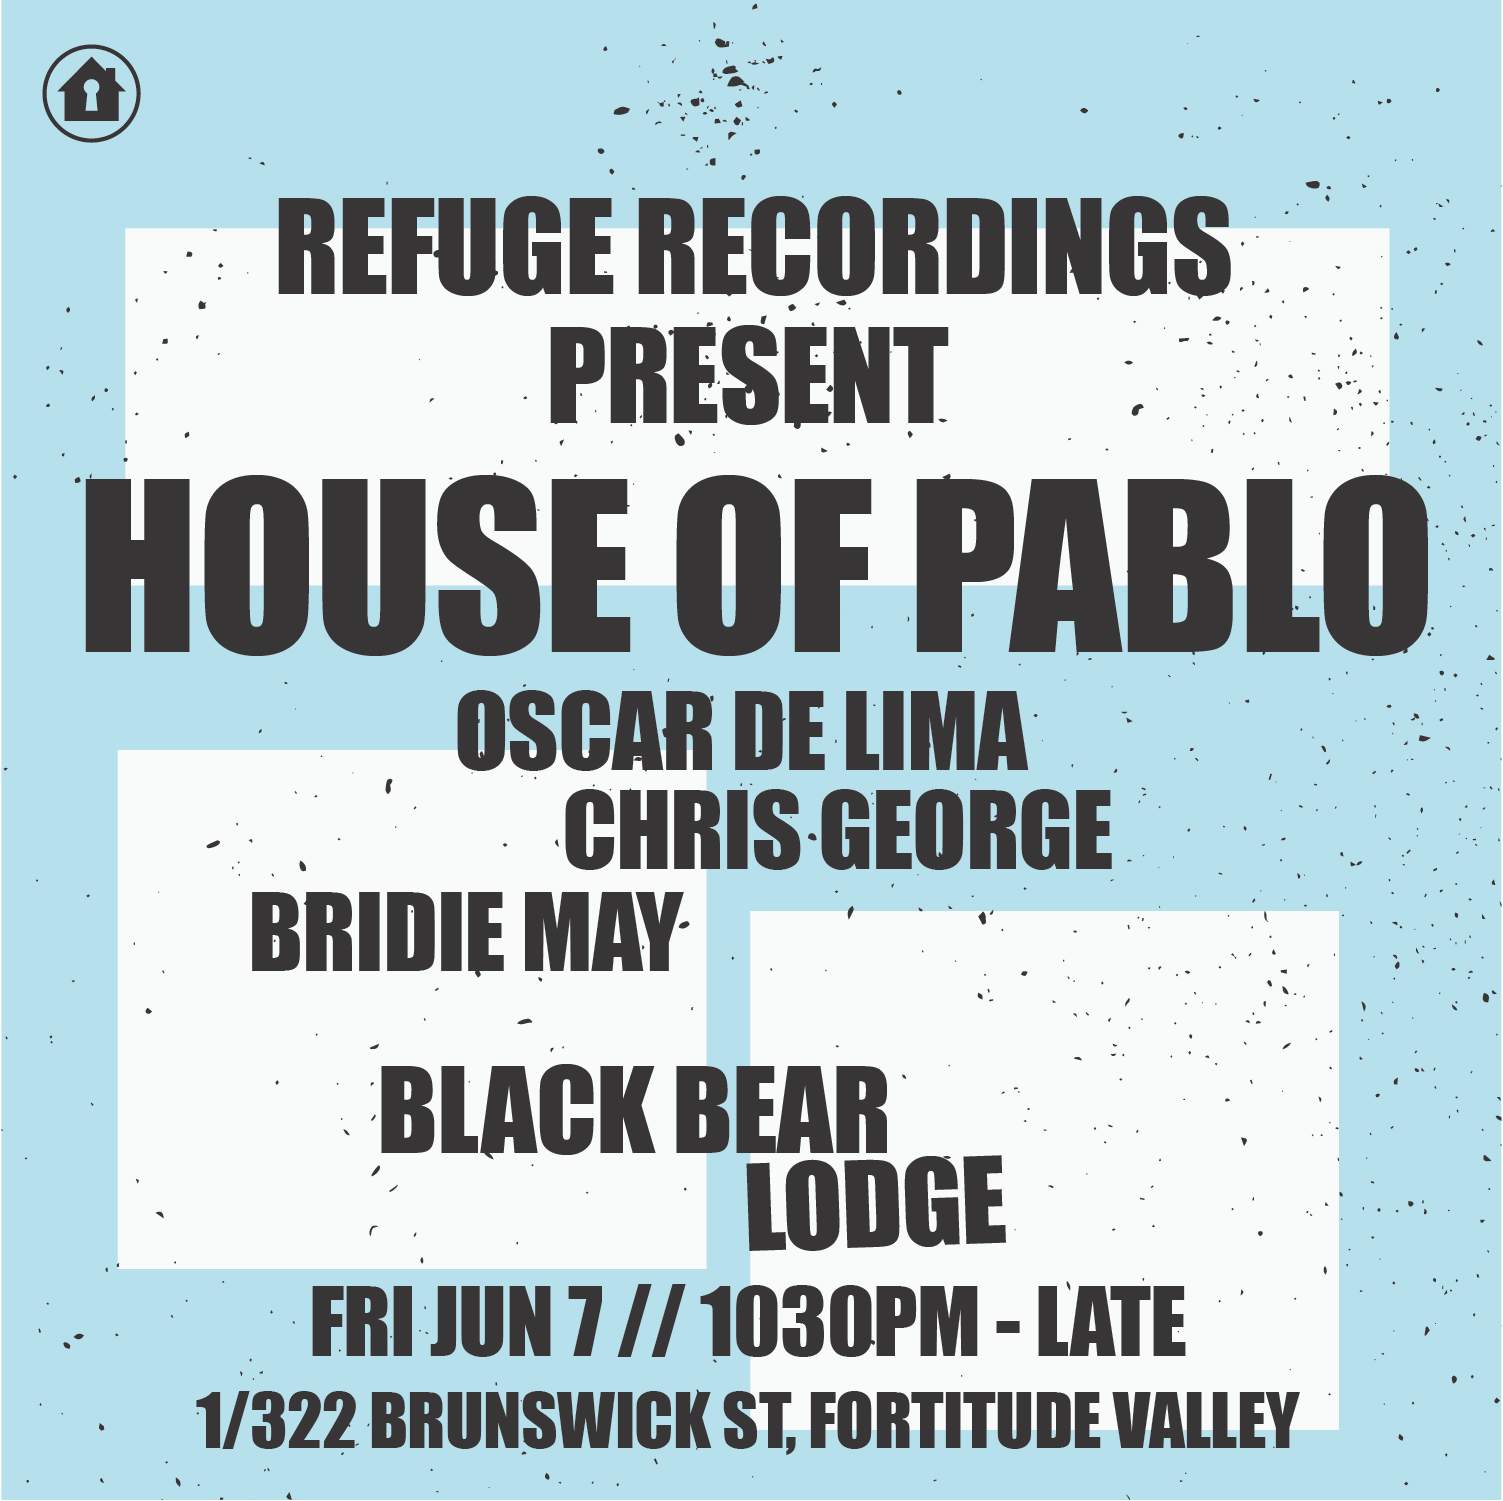 Refuge Recordings & Black Bear Lodge present House of Pablo - フライヤー表